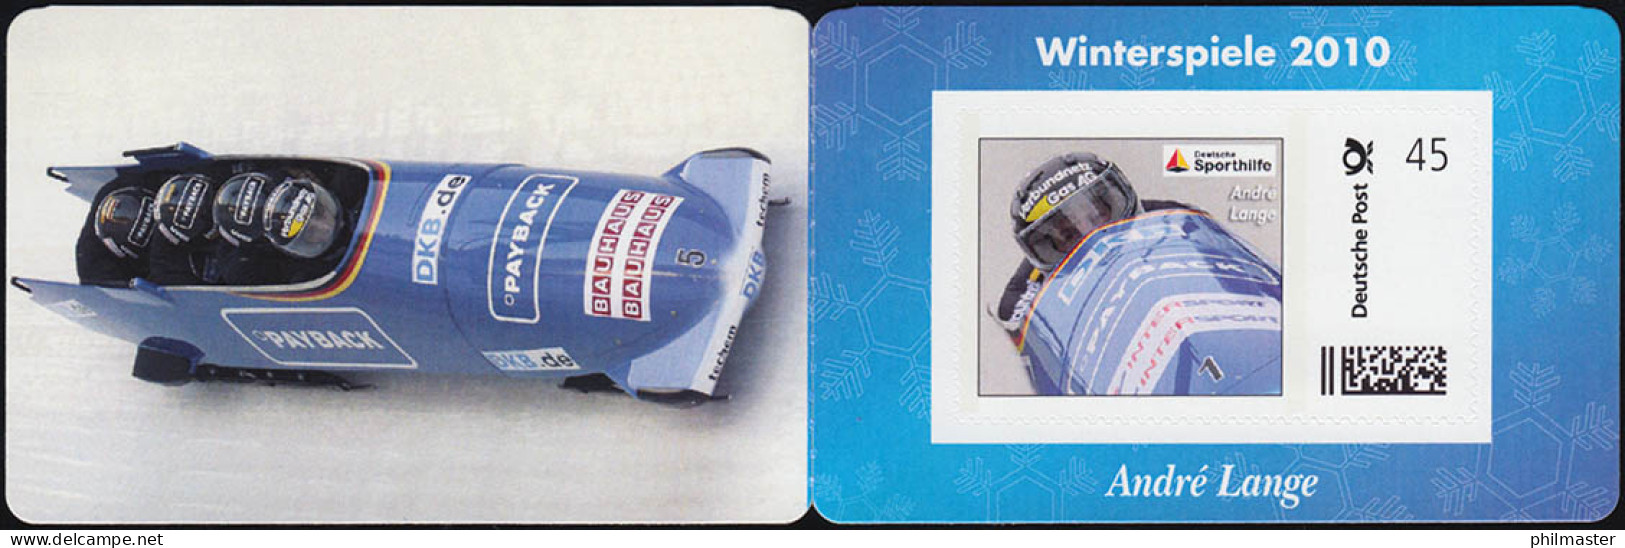 Sporthilfe: Winterspiele 2010 Portocard Bobsport Andre Lange,selbstklebend, ** - Inverno